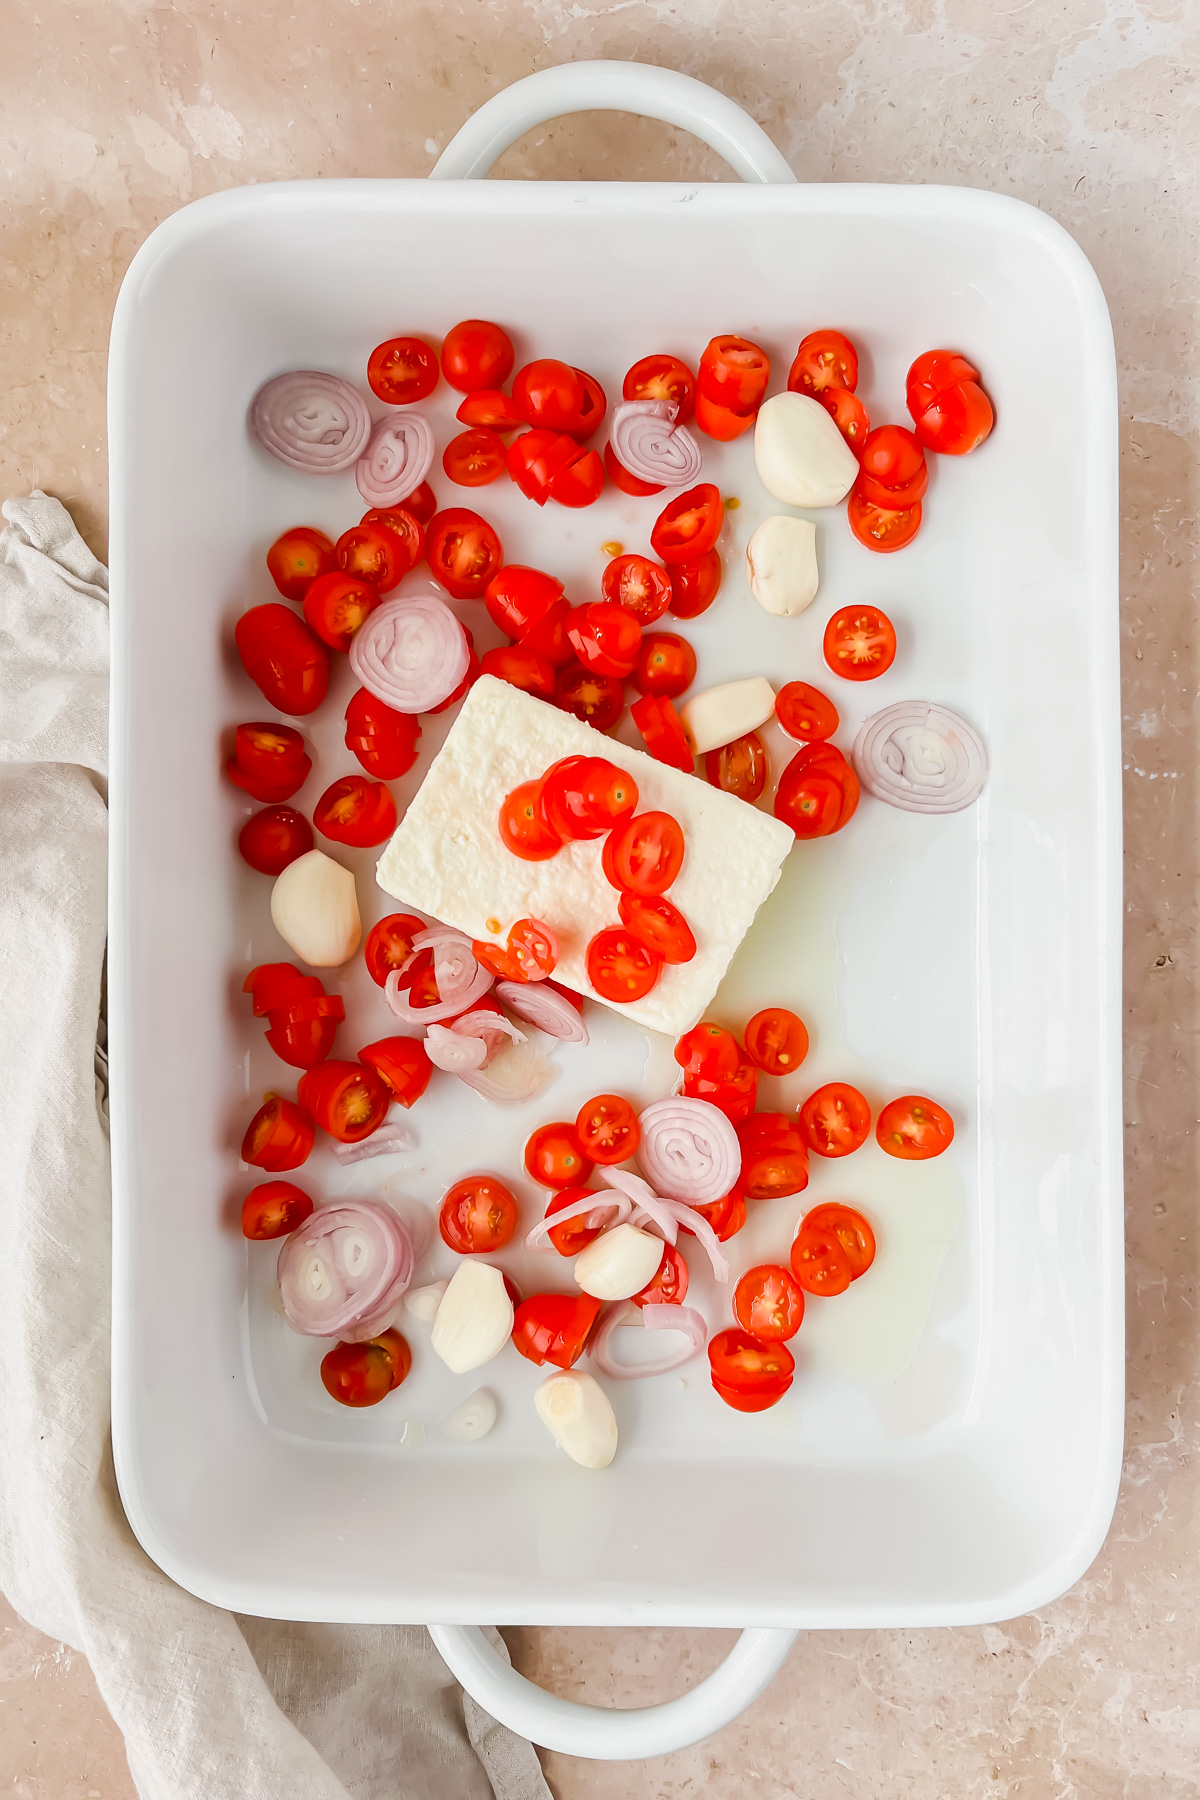 block of feta, garlic bulbs, sliced shallots, and cherry tomato halves in white baking dish.